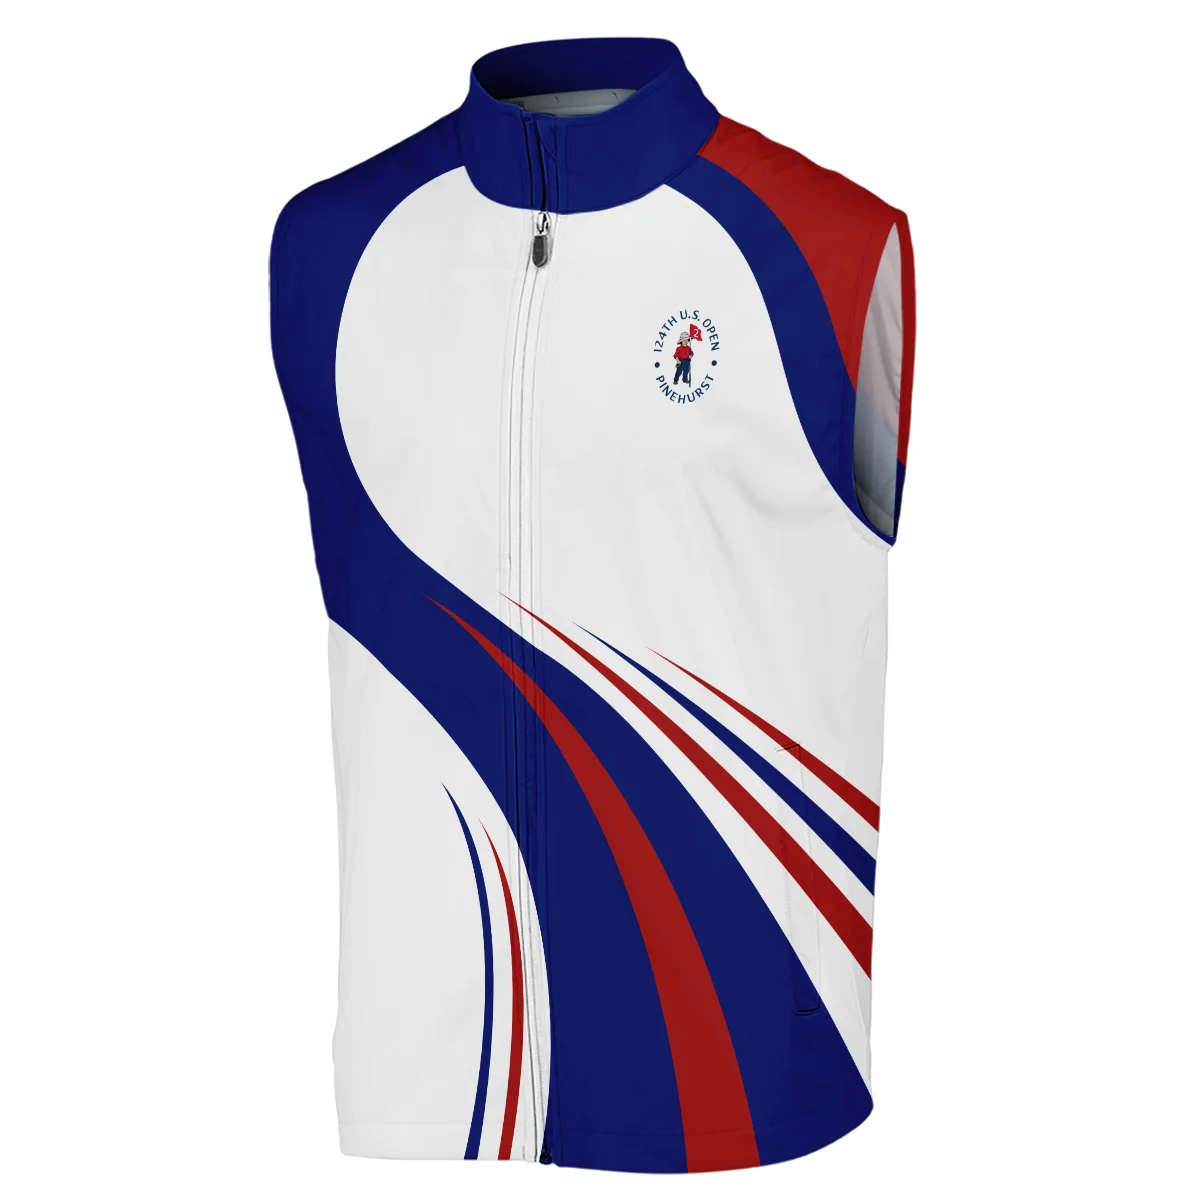 Titleist 124th U.S. Open Pinehurst Golf Blue Red White Background Zipper Polo Shirt Style Classic Zipper Polo Shirt For Men